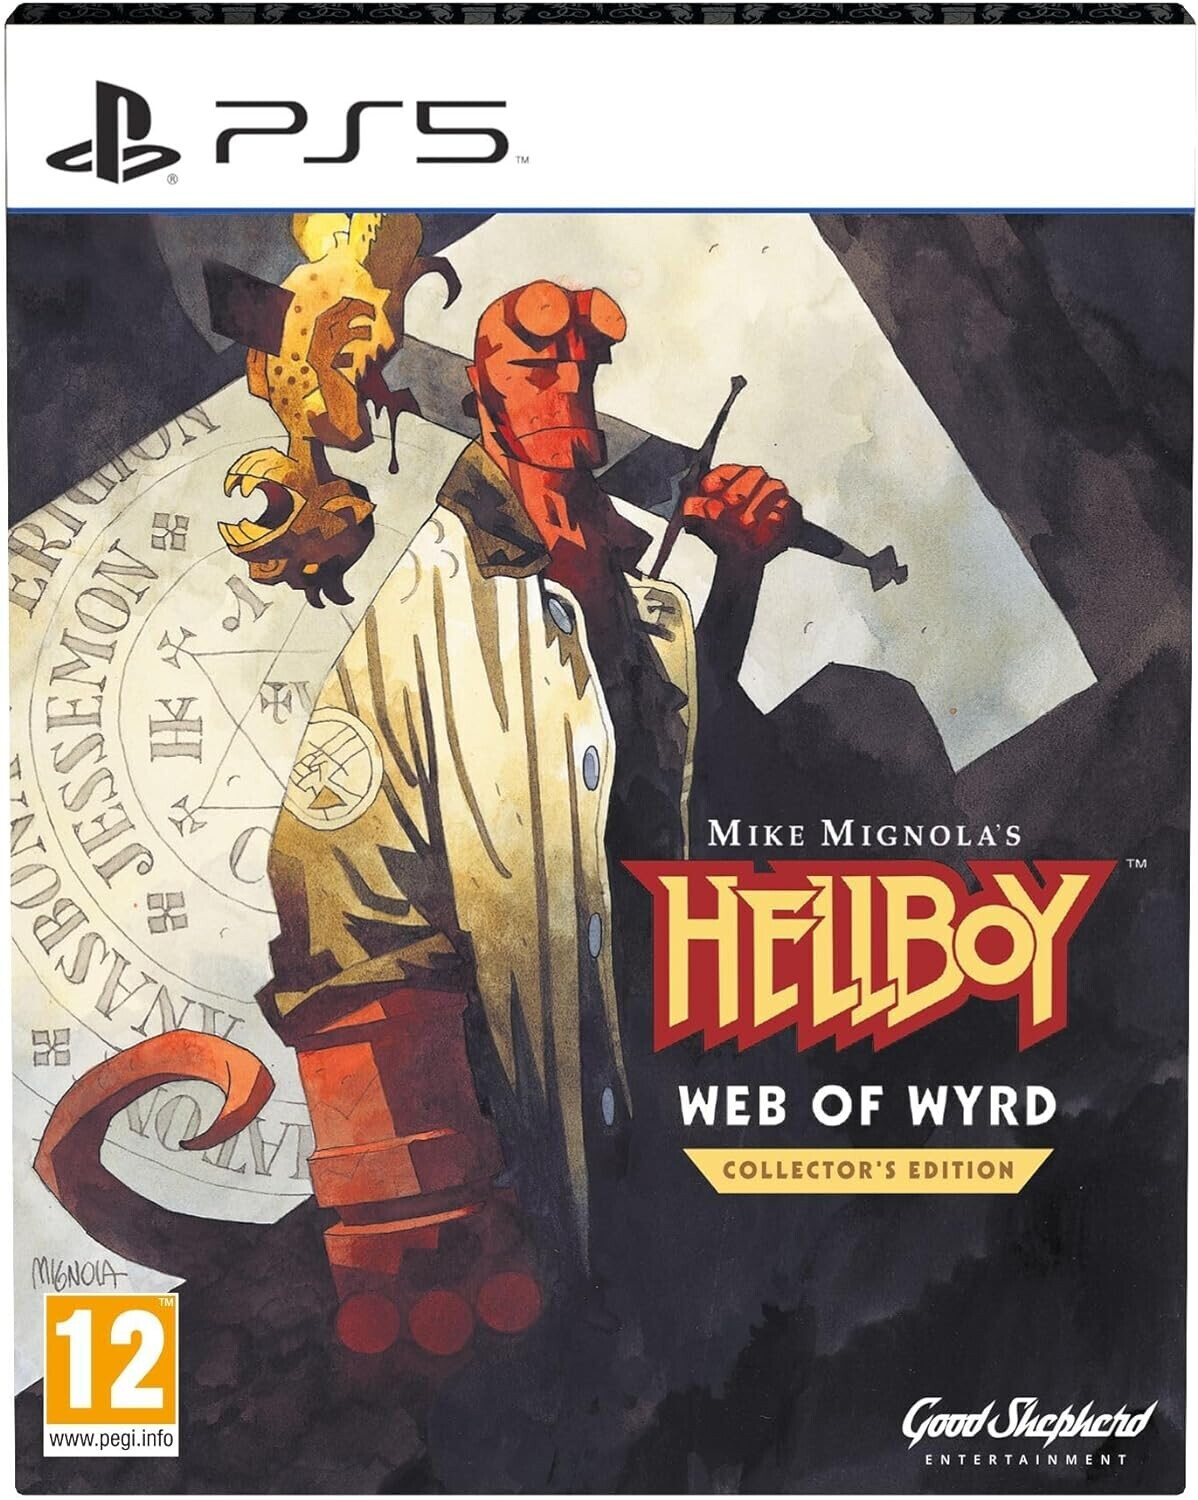 Photos - Game Good Shepherd Entertainment Mike Mignola's Hellboy: Web of Wyrd - Collecto